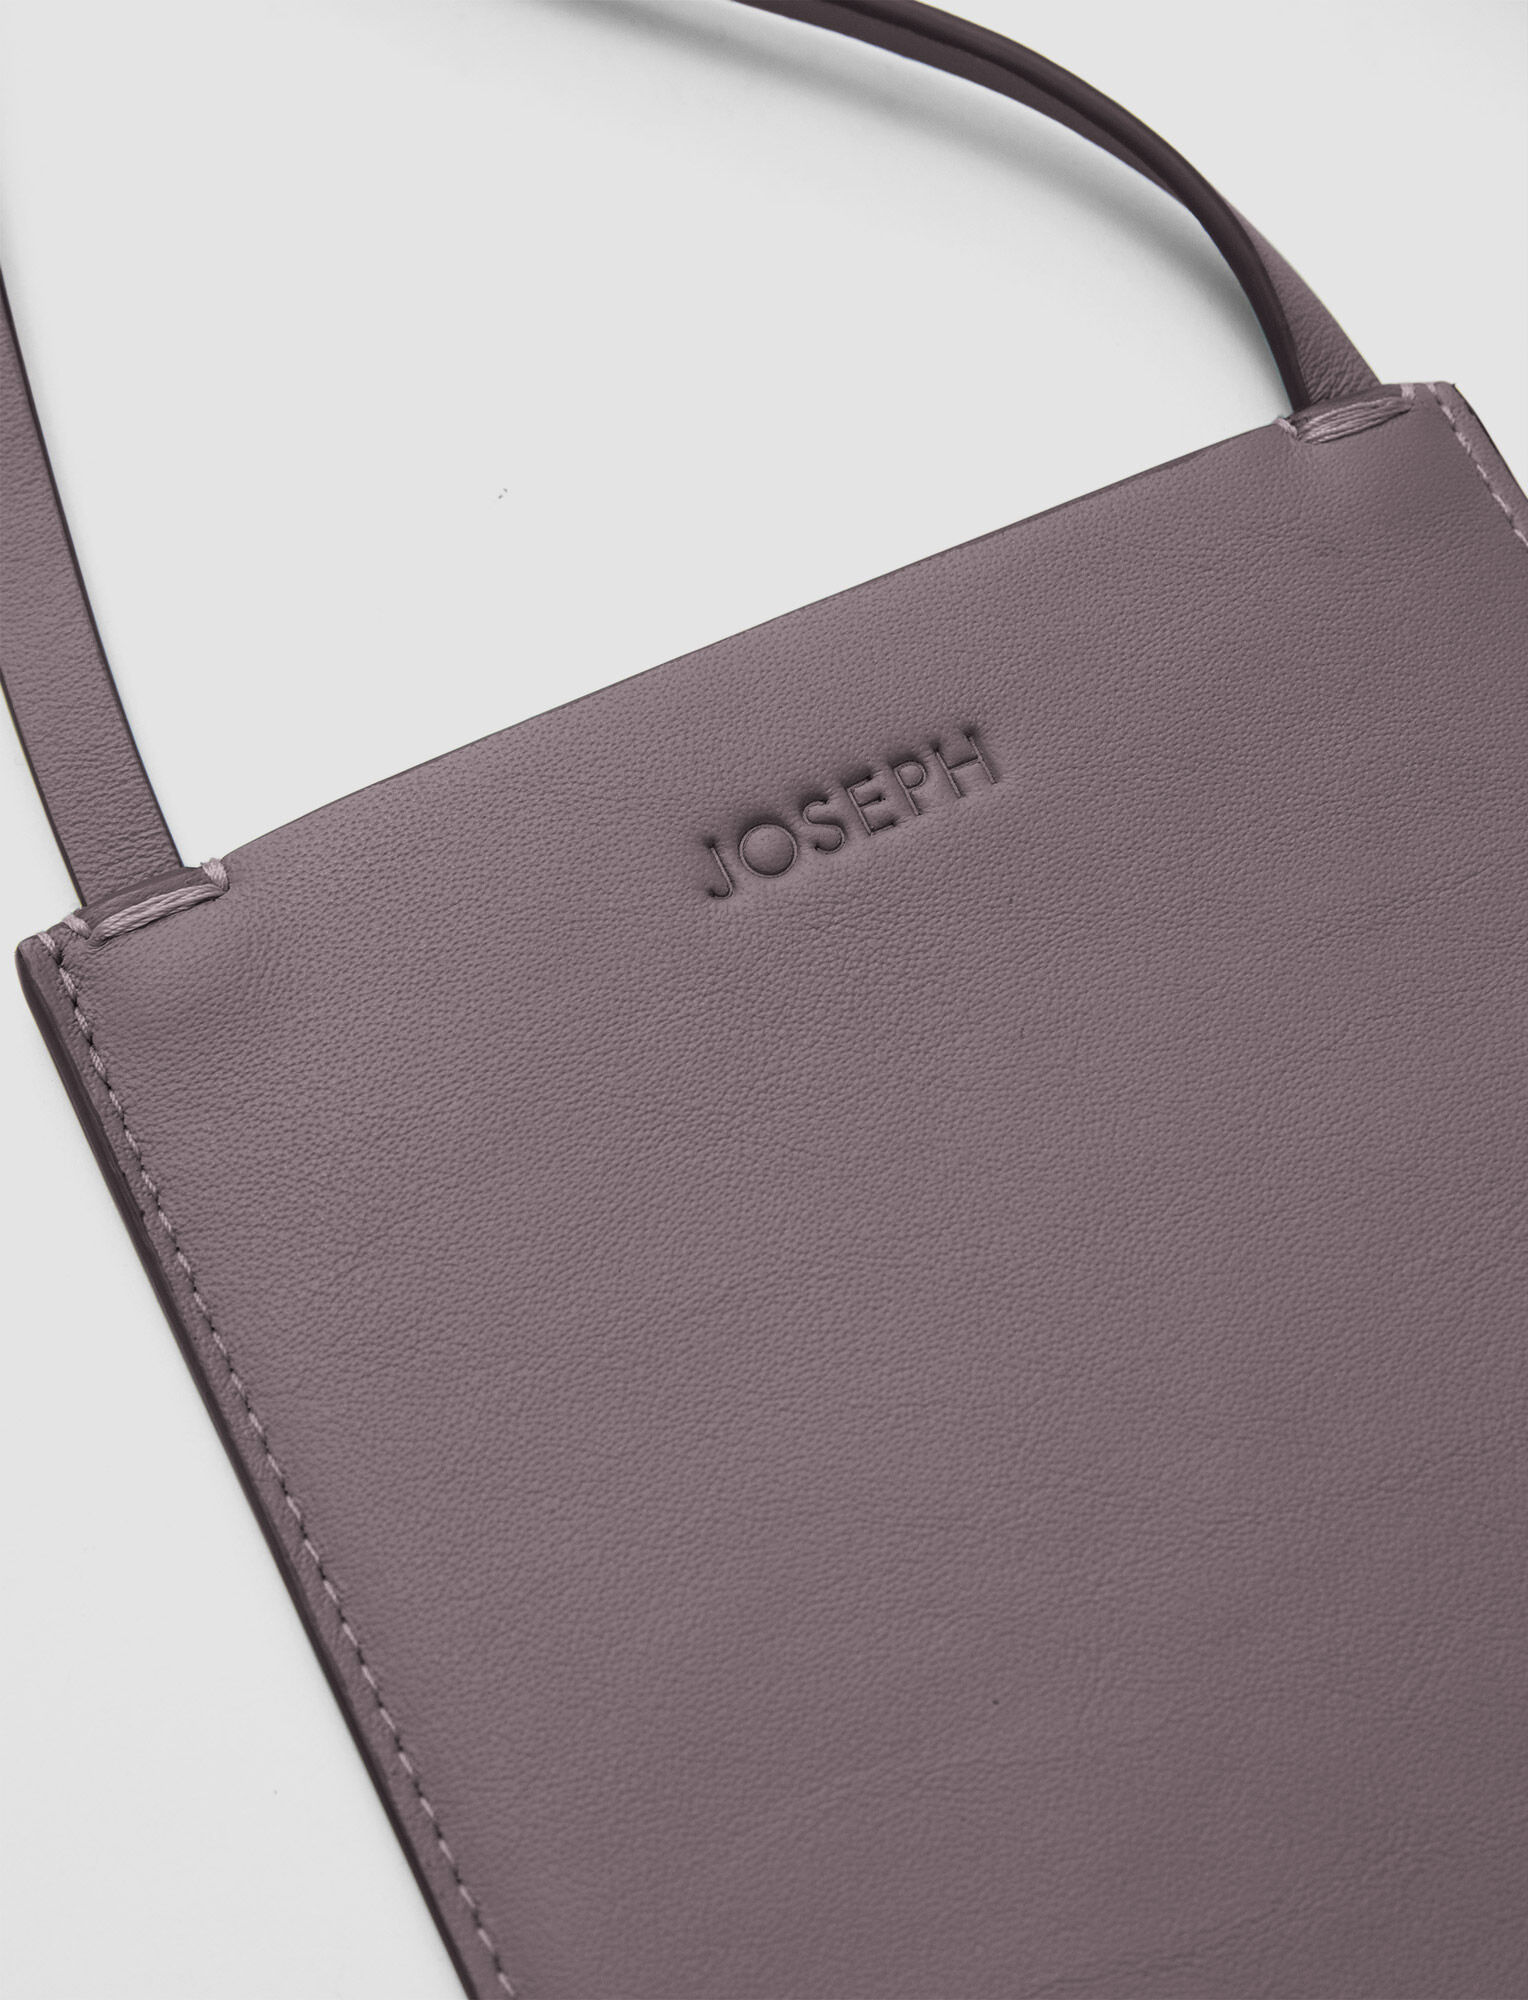 Joseph, Leather Pocket Bag, in Truffle